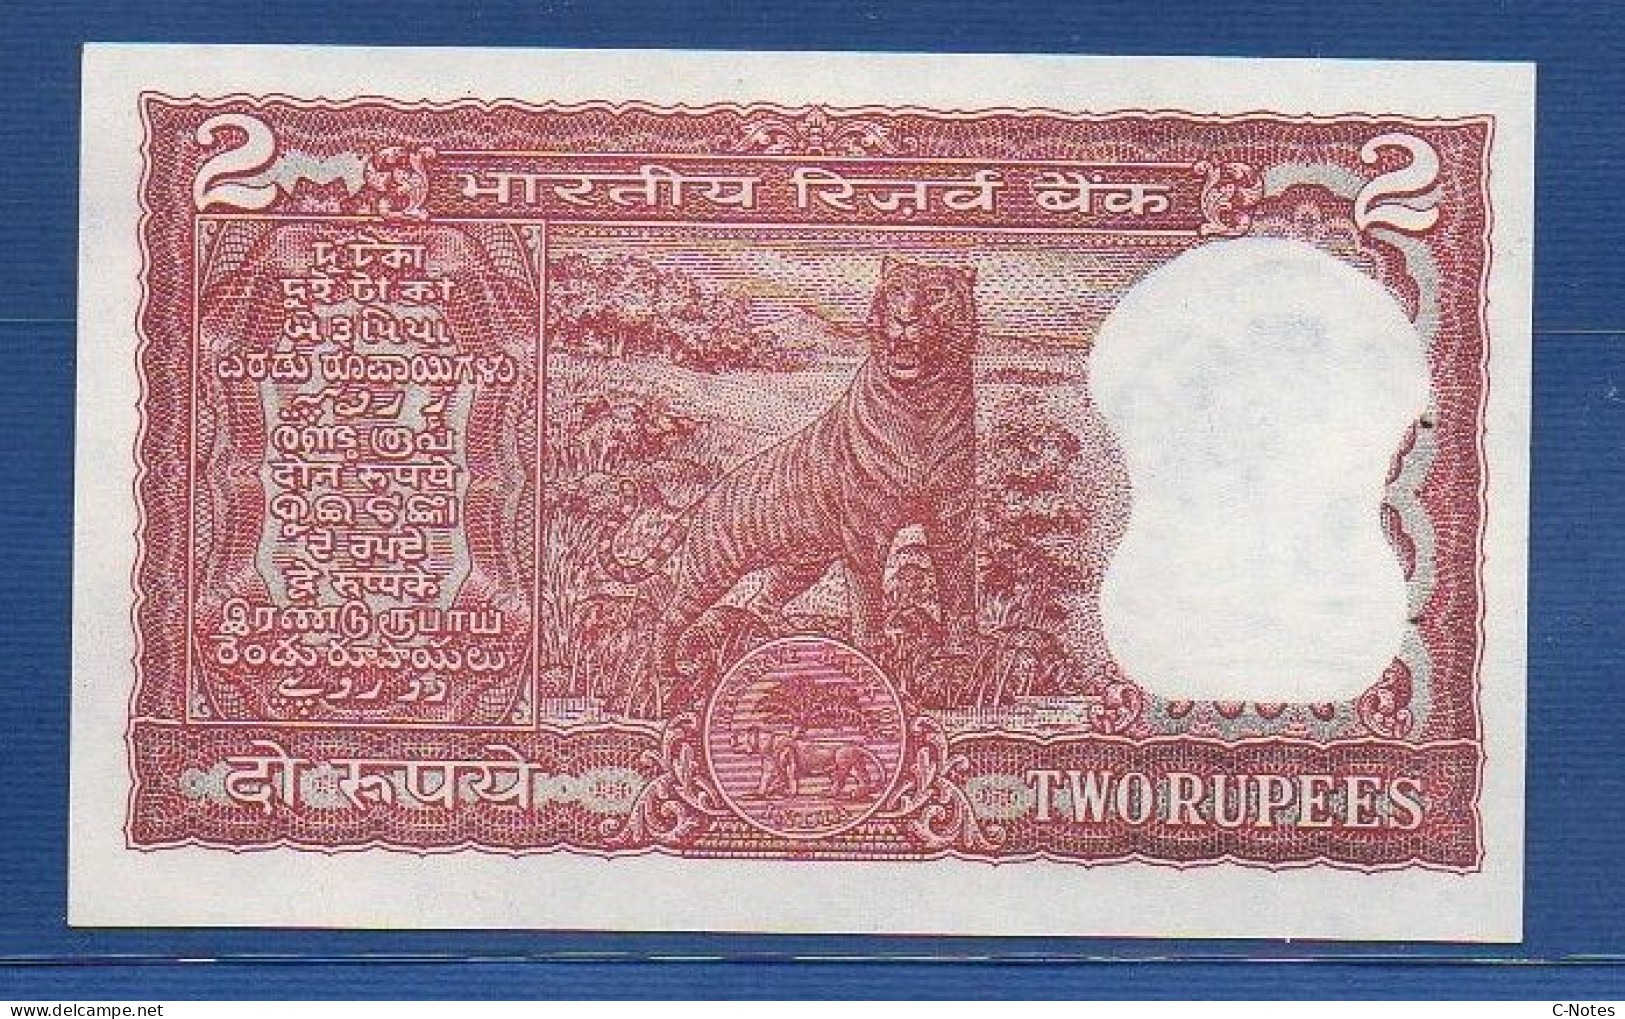 INDIA - P. 53f – 2 Rupees ND, UNC,  Serie G4 708953 - Plate Letter C Signature: I. G. Patel (1977-1982) - India